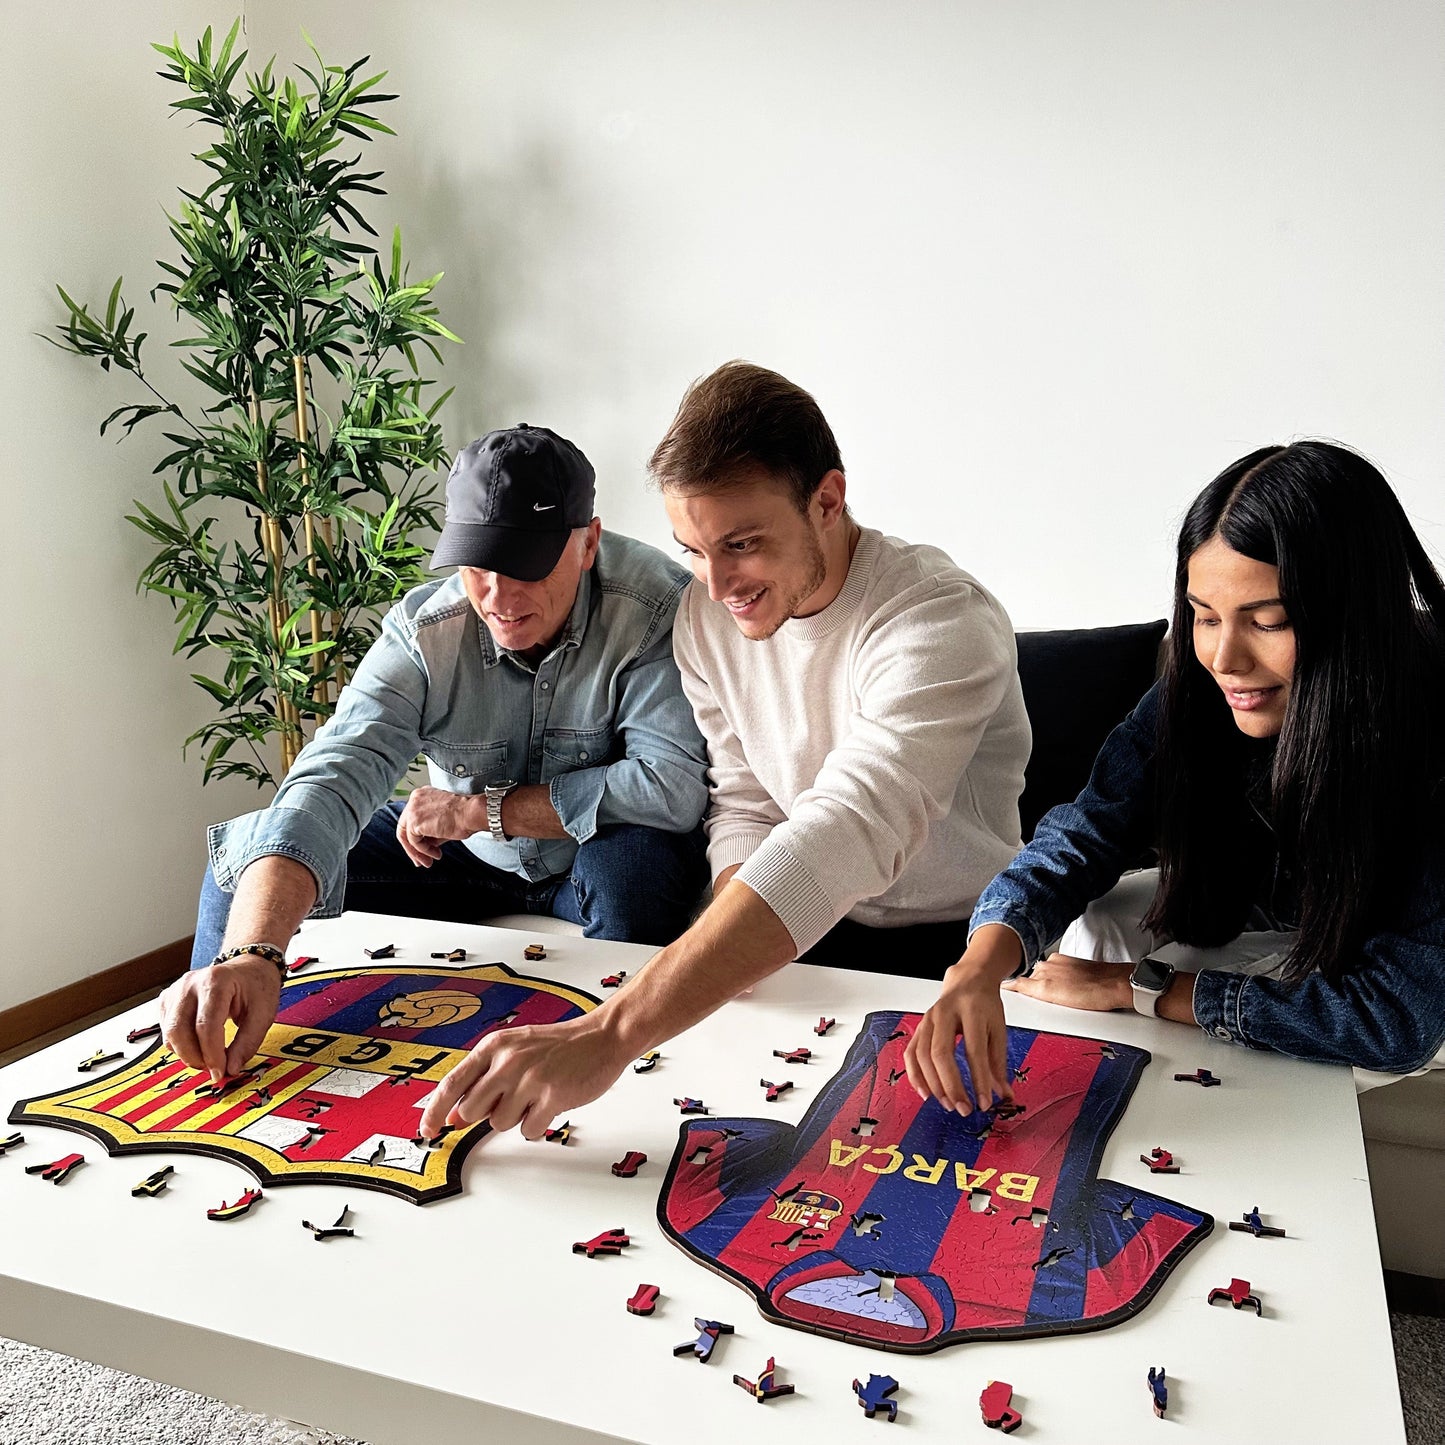 2 PACK FC Barcelona® Crest + Lewandowski